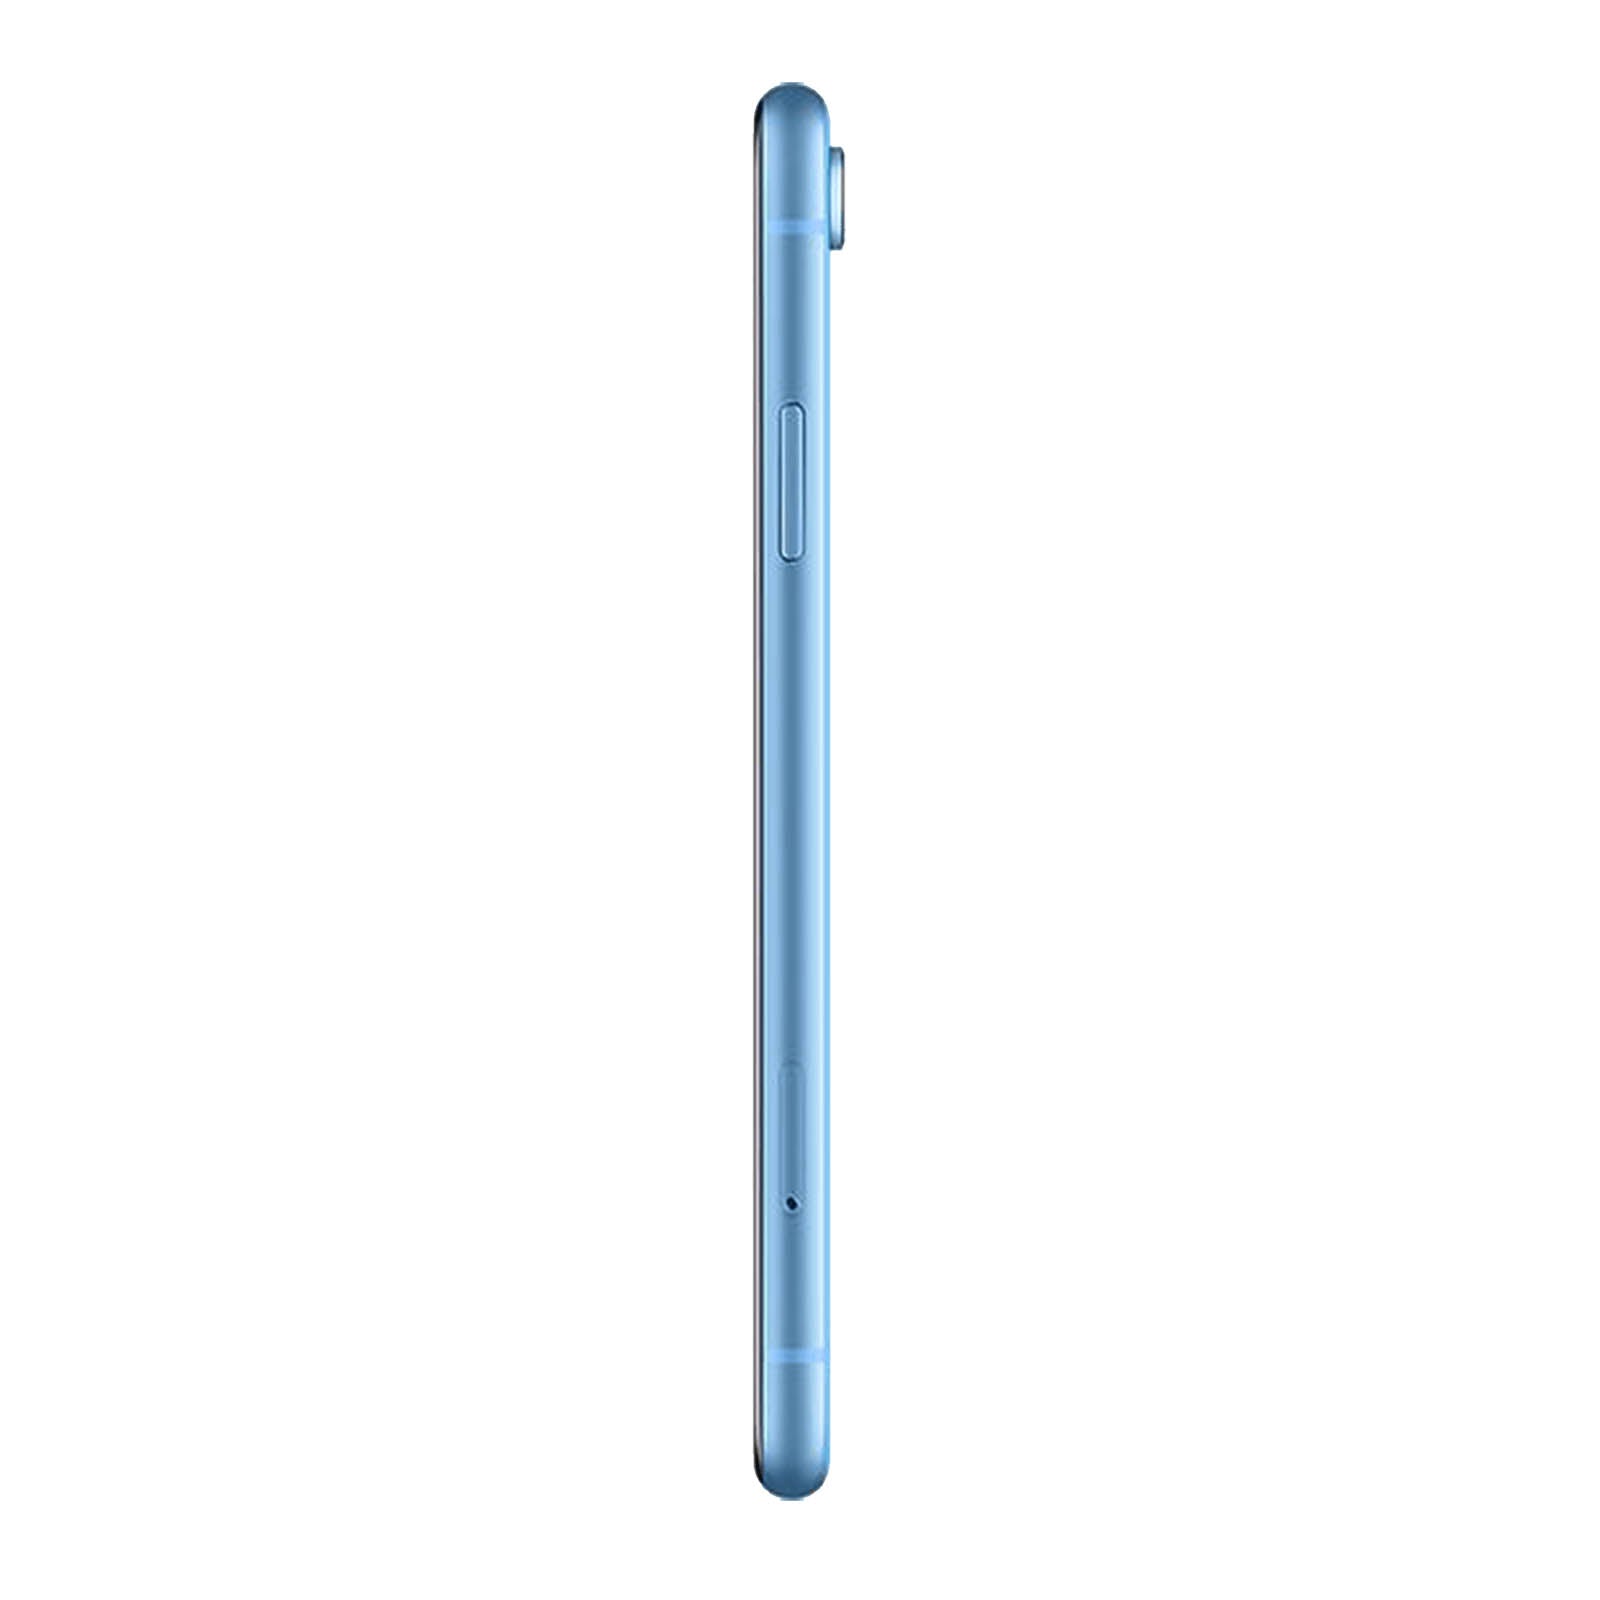 Apple iPhone XR 64GB Blue Good - Verizon